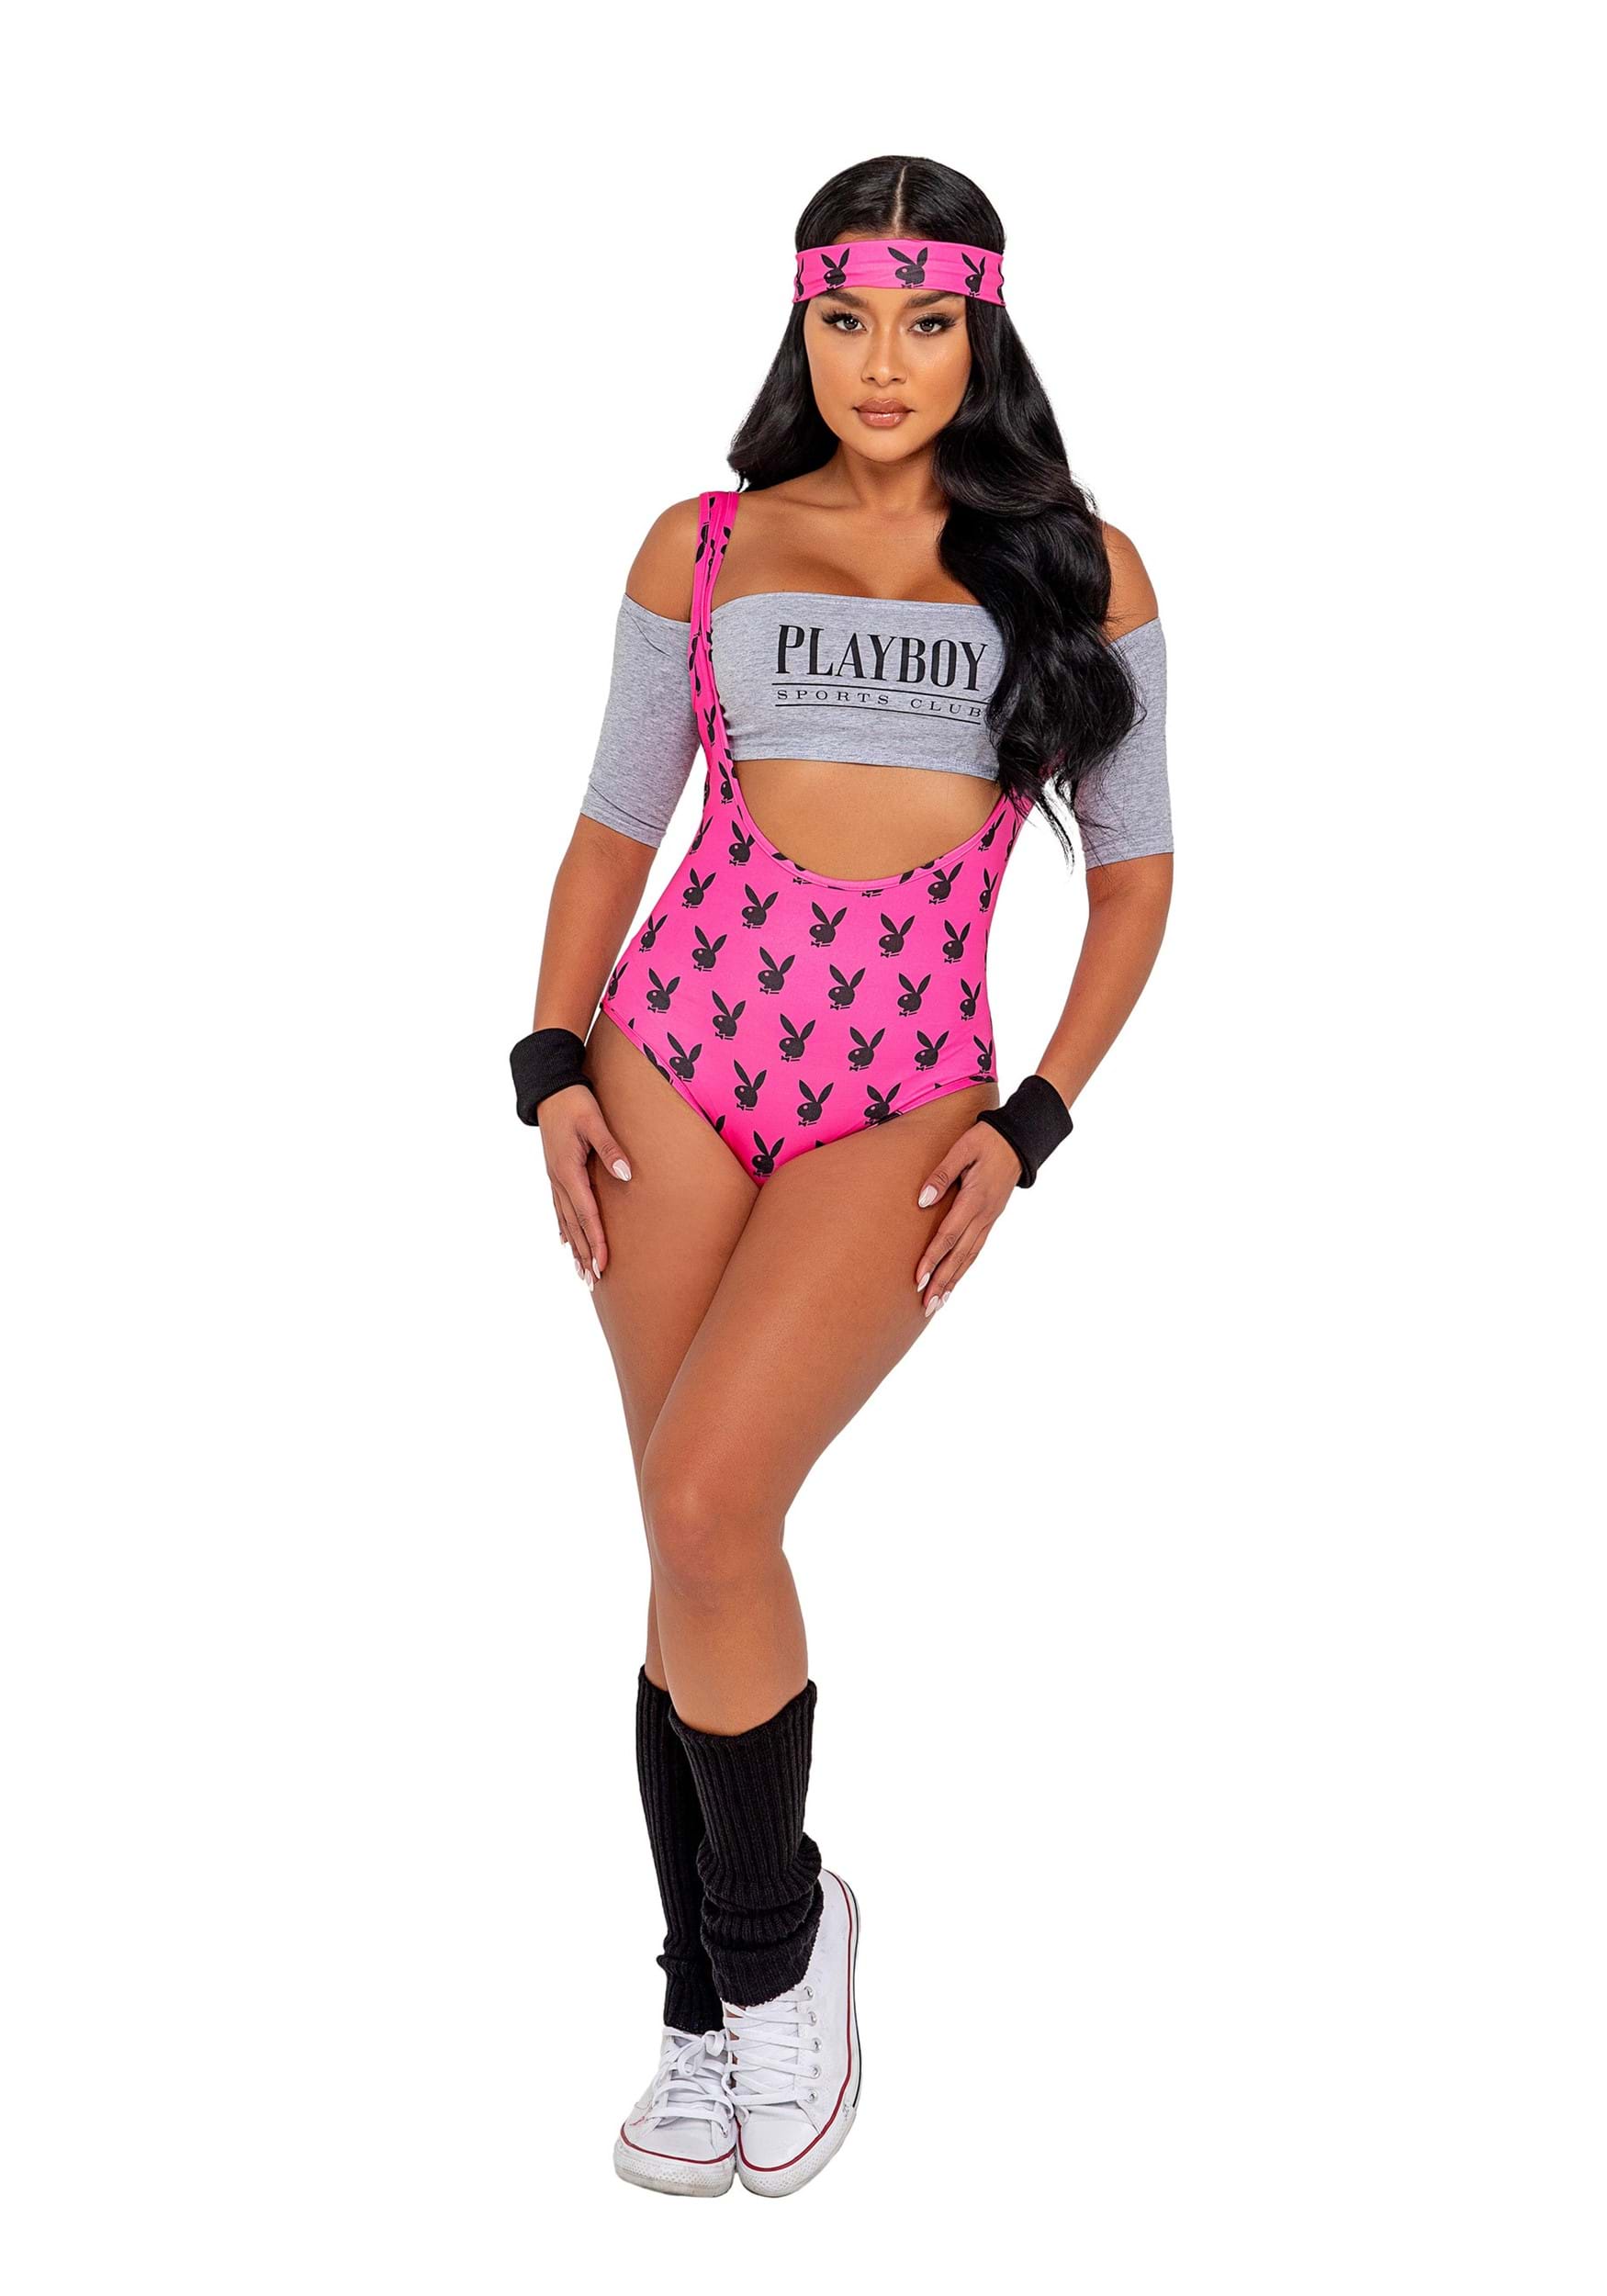 Playboy Women’s Retro Physical Costume